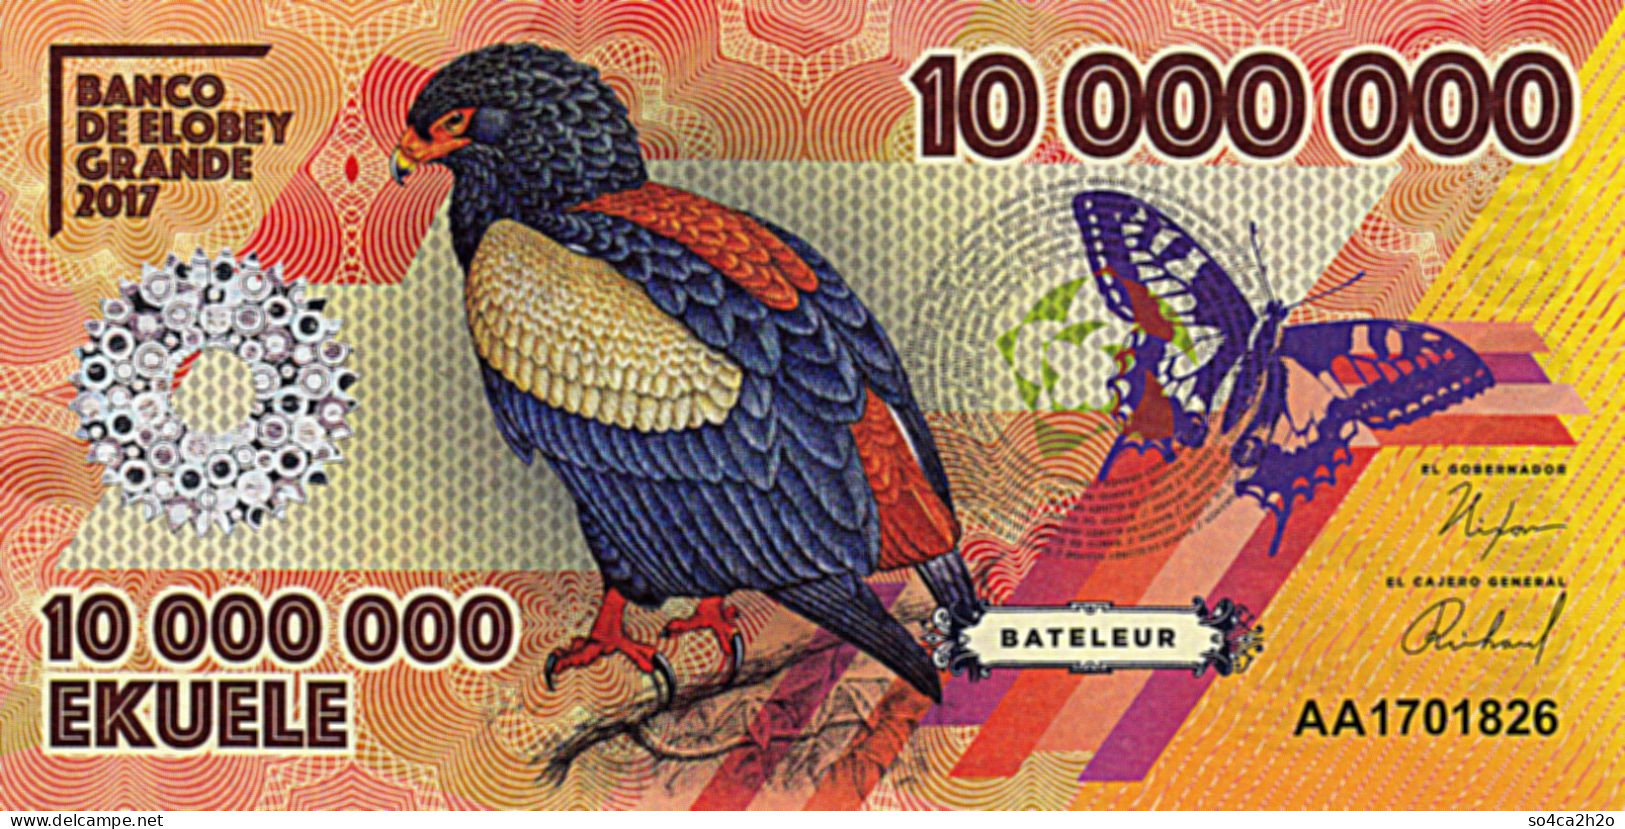 Banco De Elobey Grande 10 00 000 EKUELE 2017 Bateleur UNC - Guinée Equatoriale